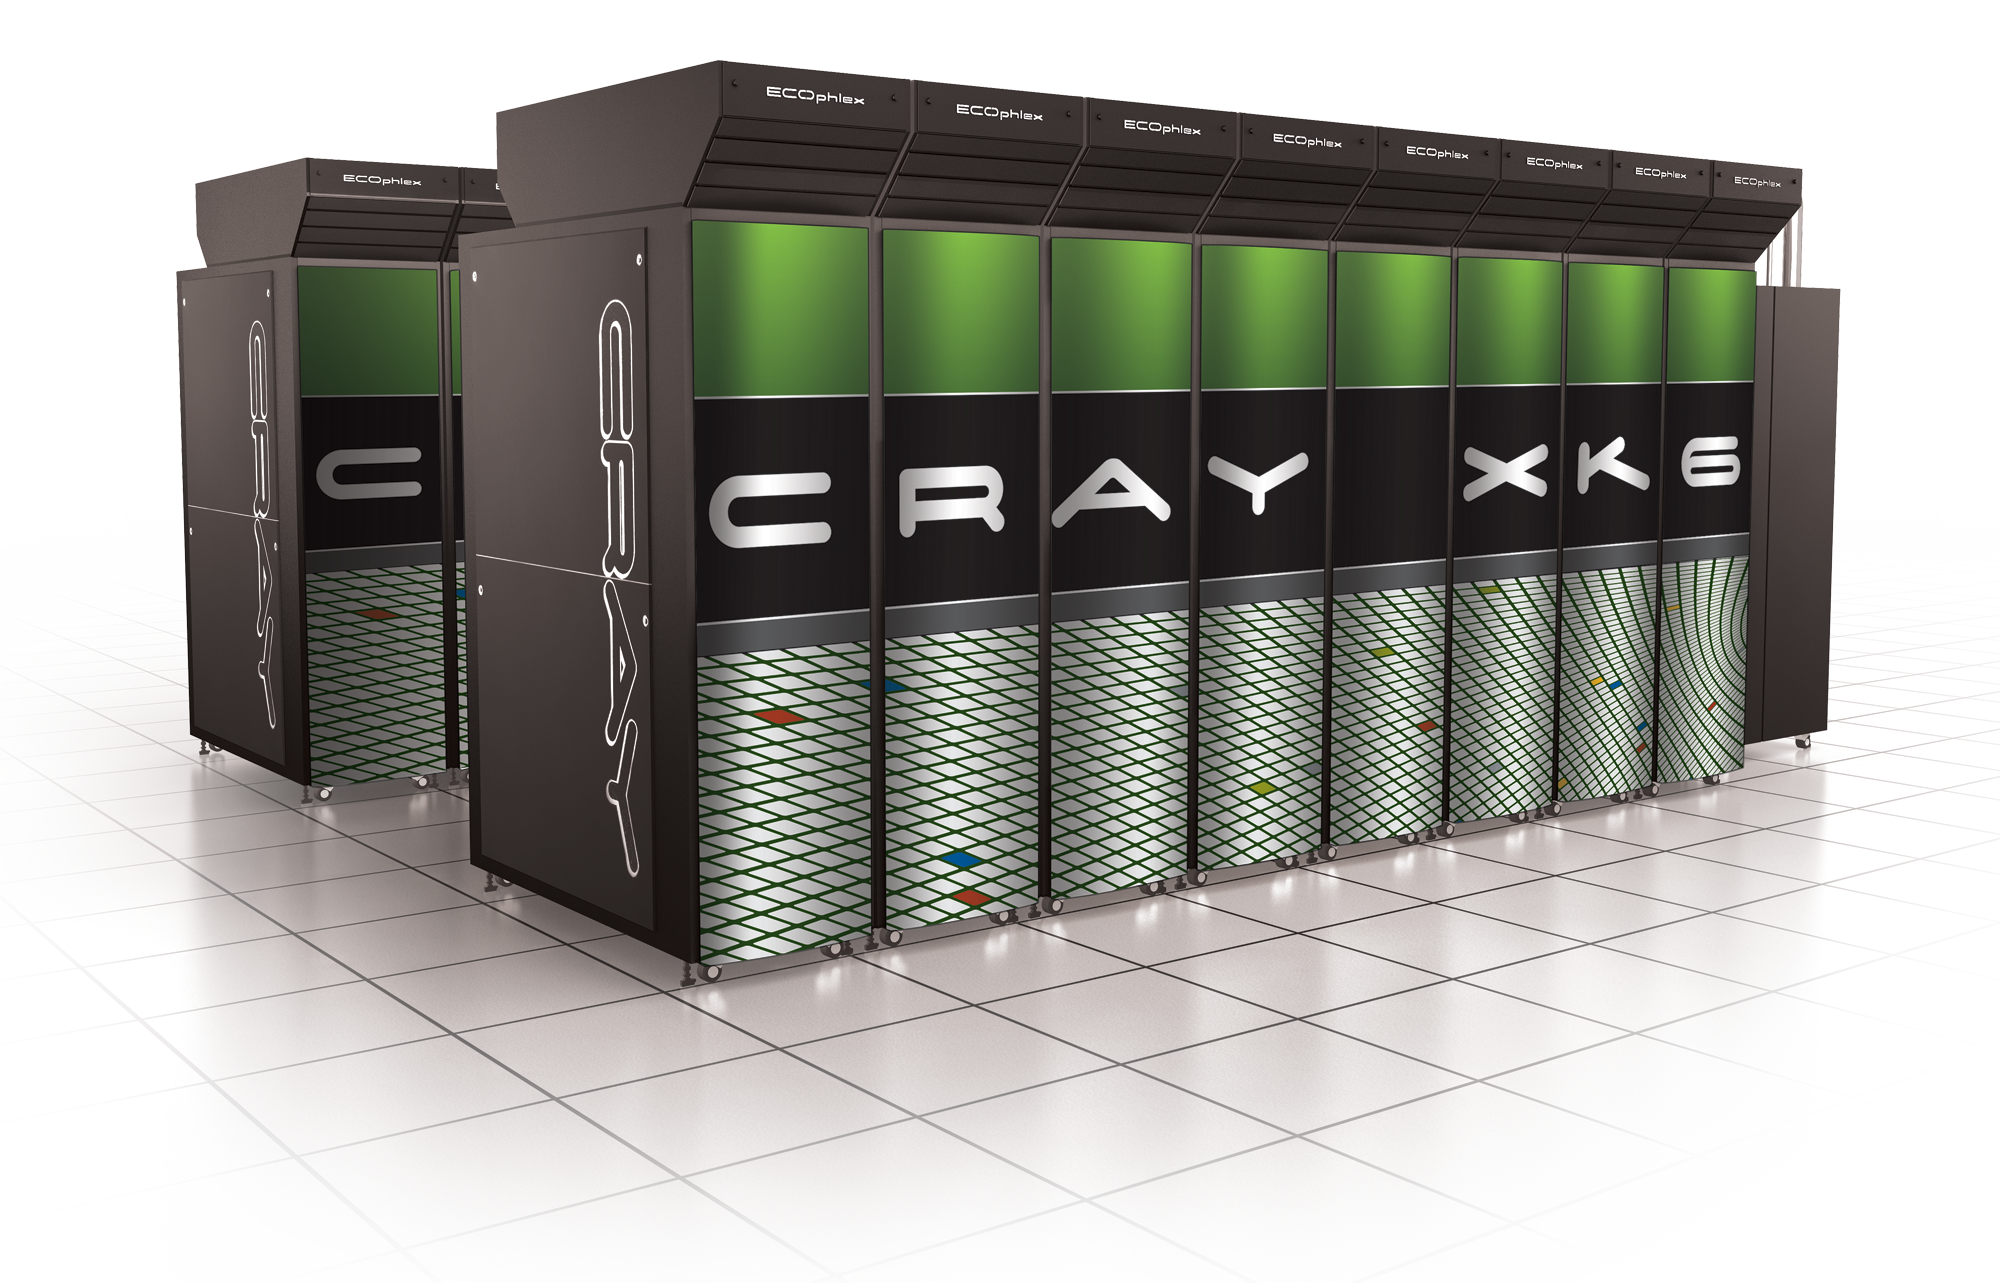 Titan Ibm Supercomputer Cray Top500 Xk6 PNG Image